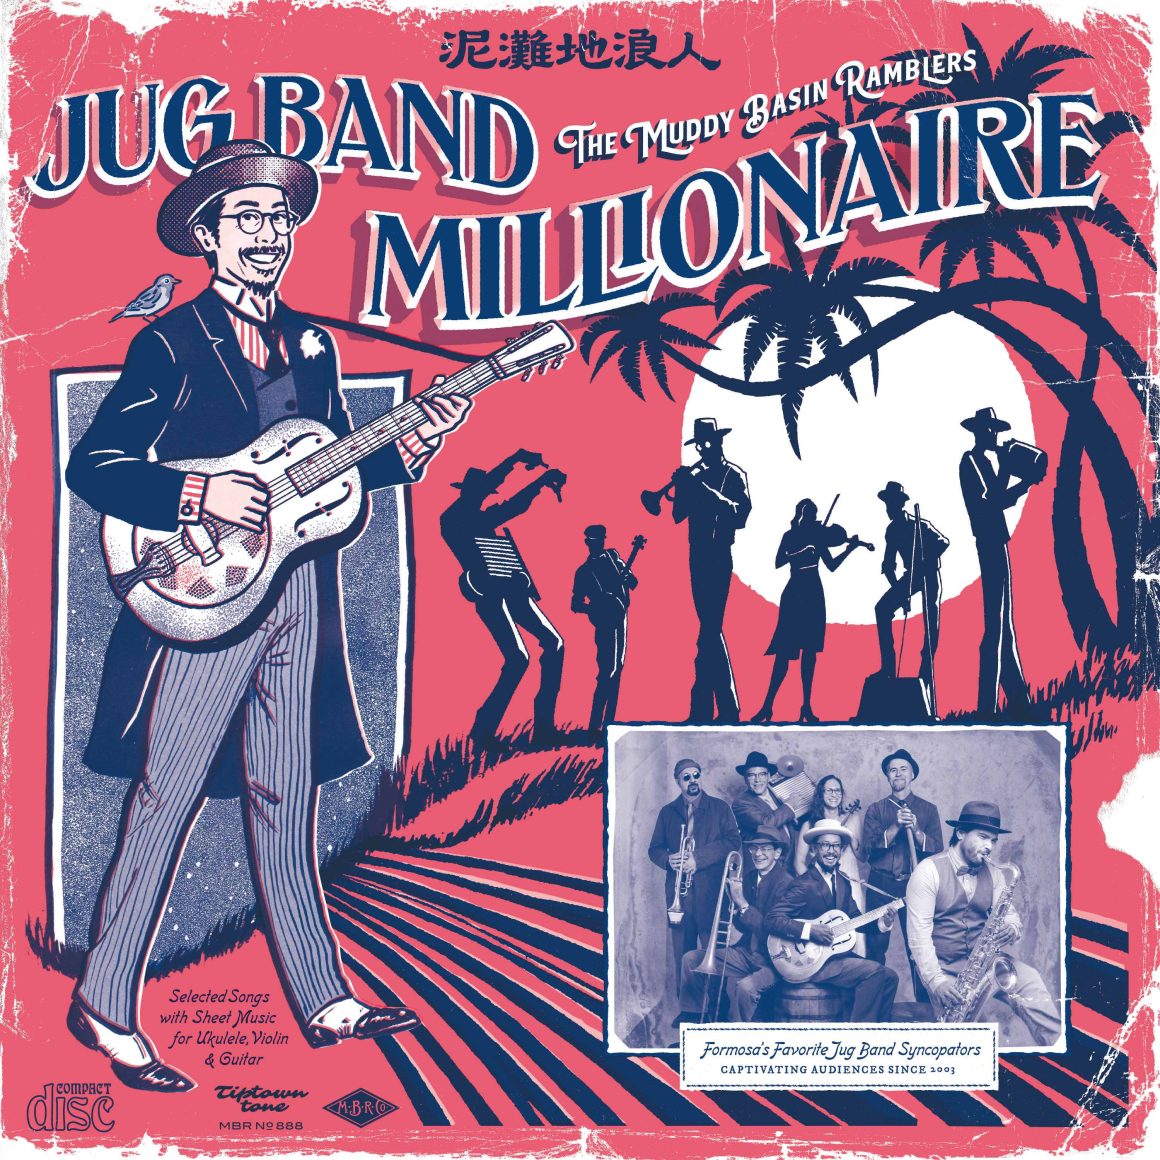 The Muddy Basin Ramblers' new album, "Jug Band Millionaire" (Photo: The Muddy Basin Ramblers)